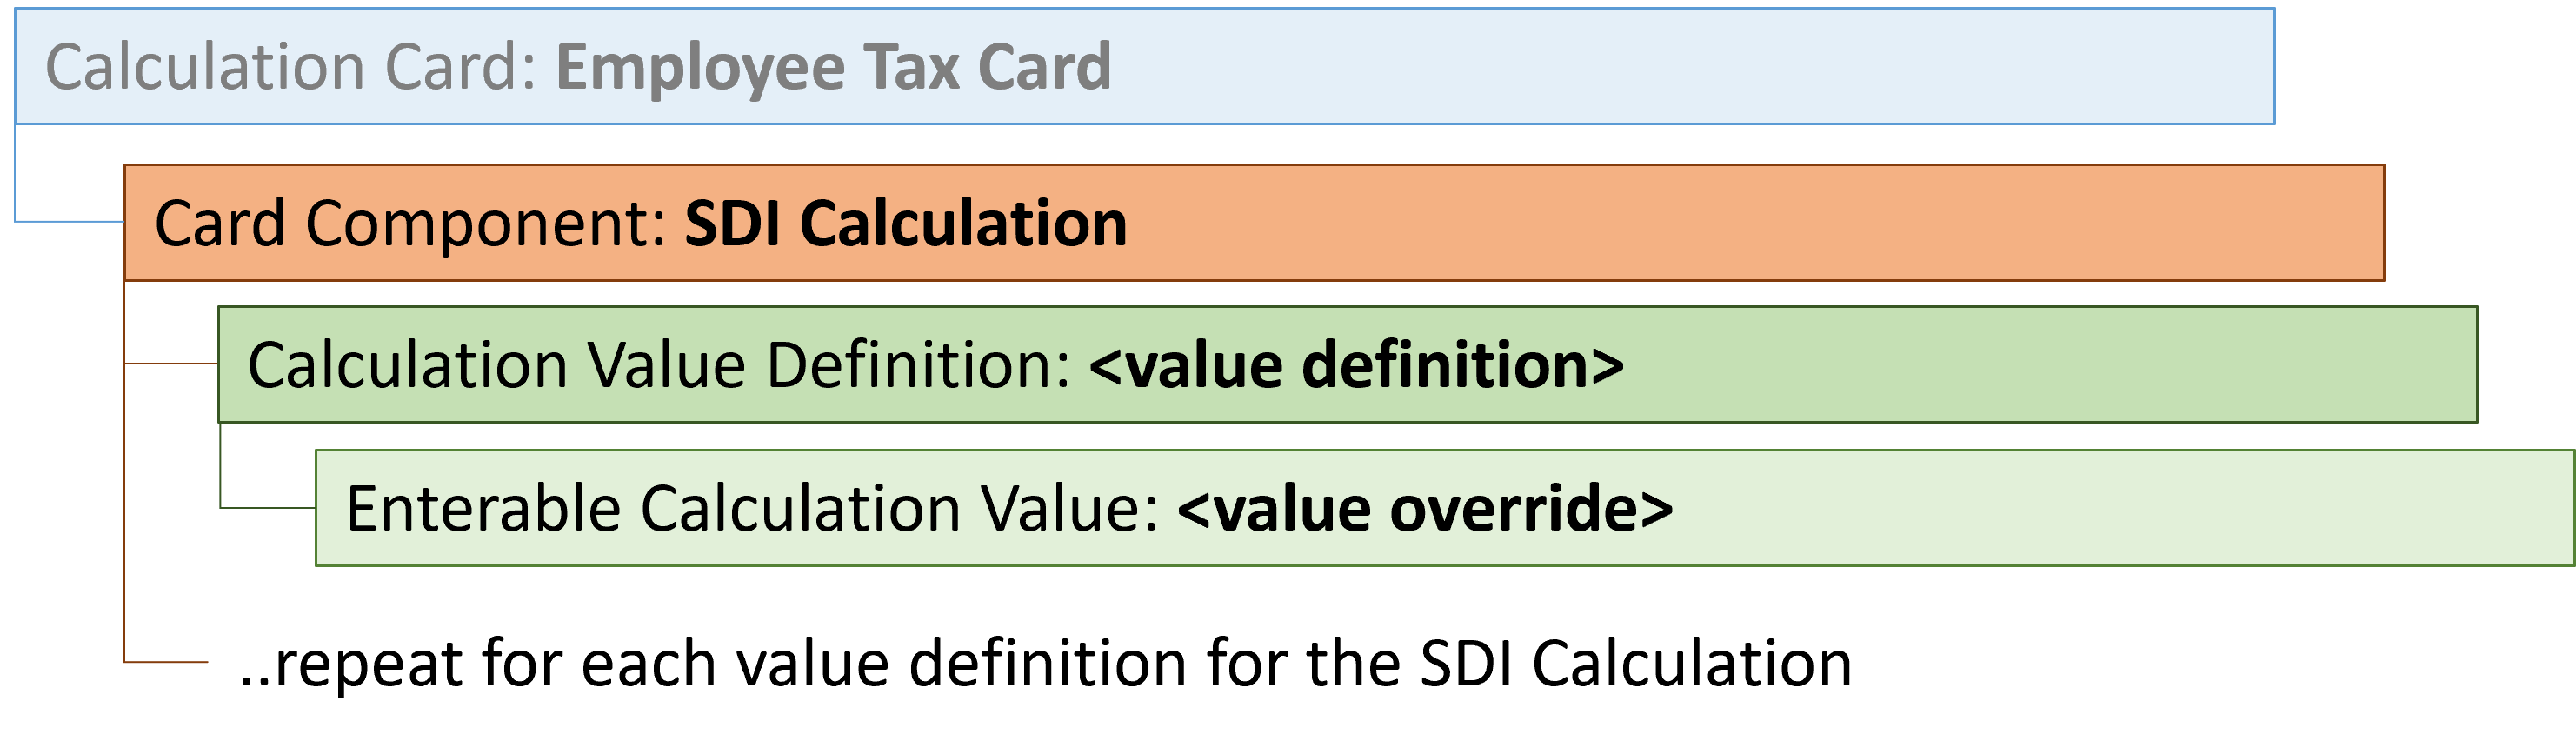 employee tax card sdi calculation card component